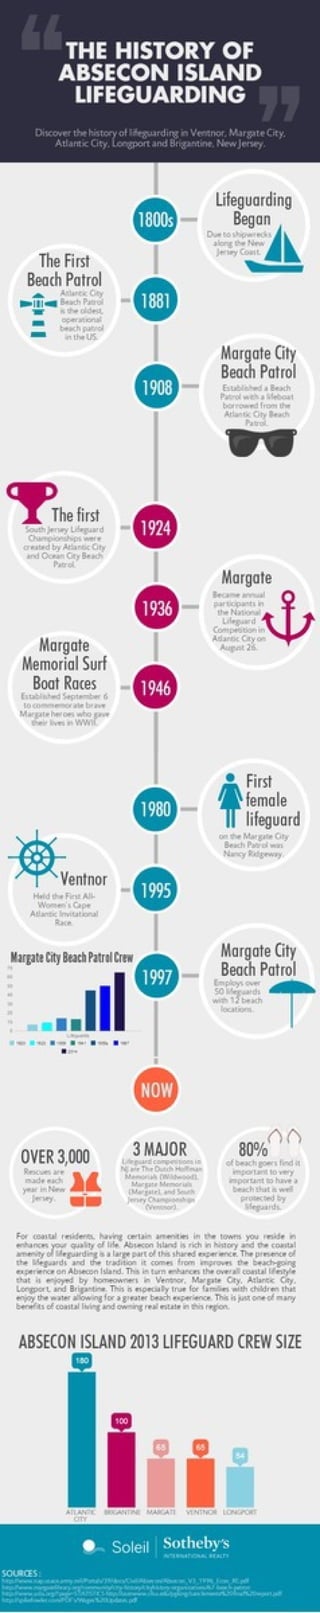 History of Lifeguarding